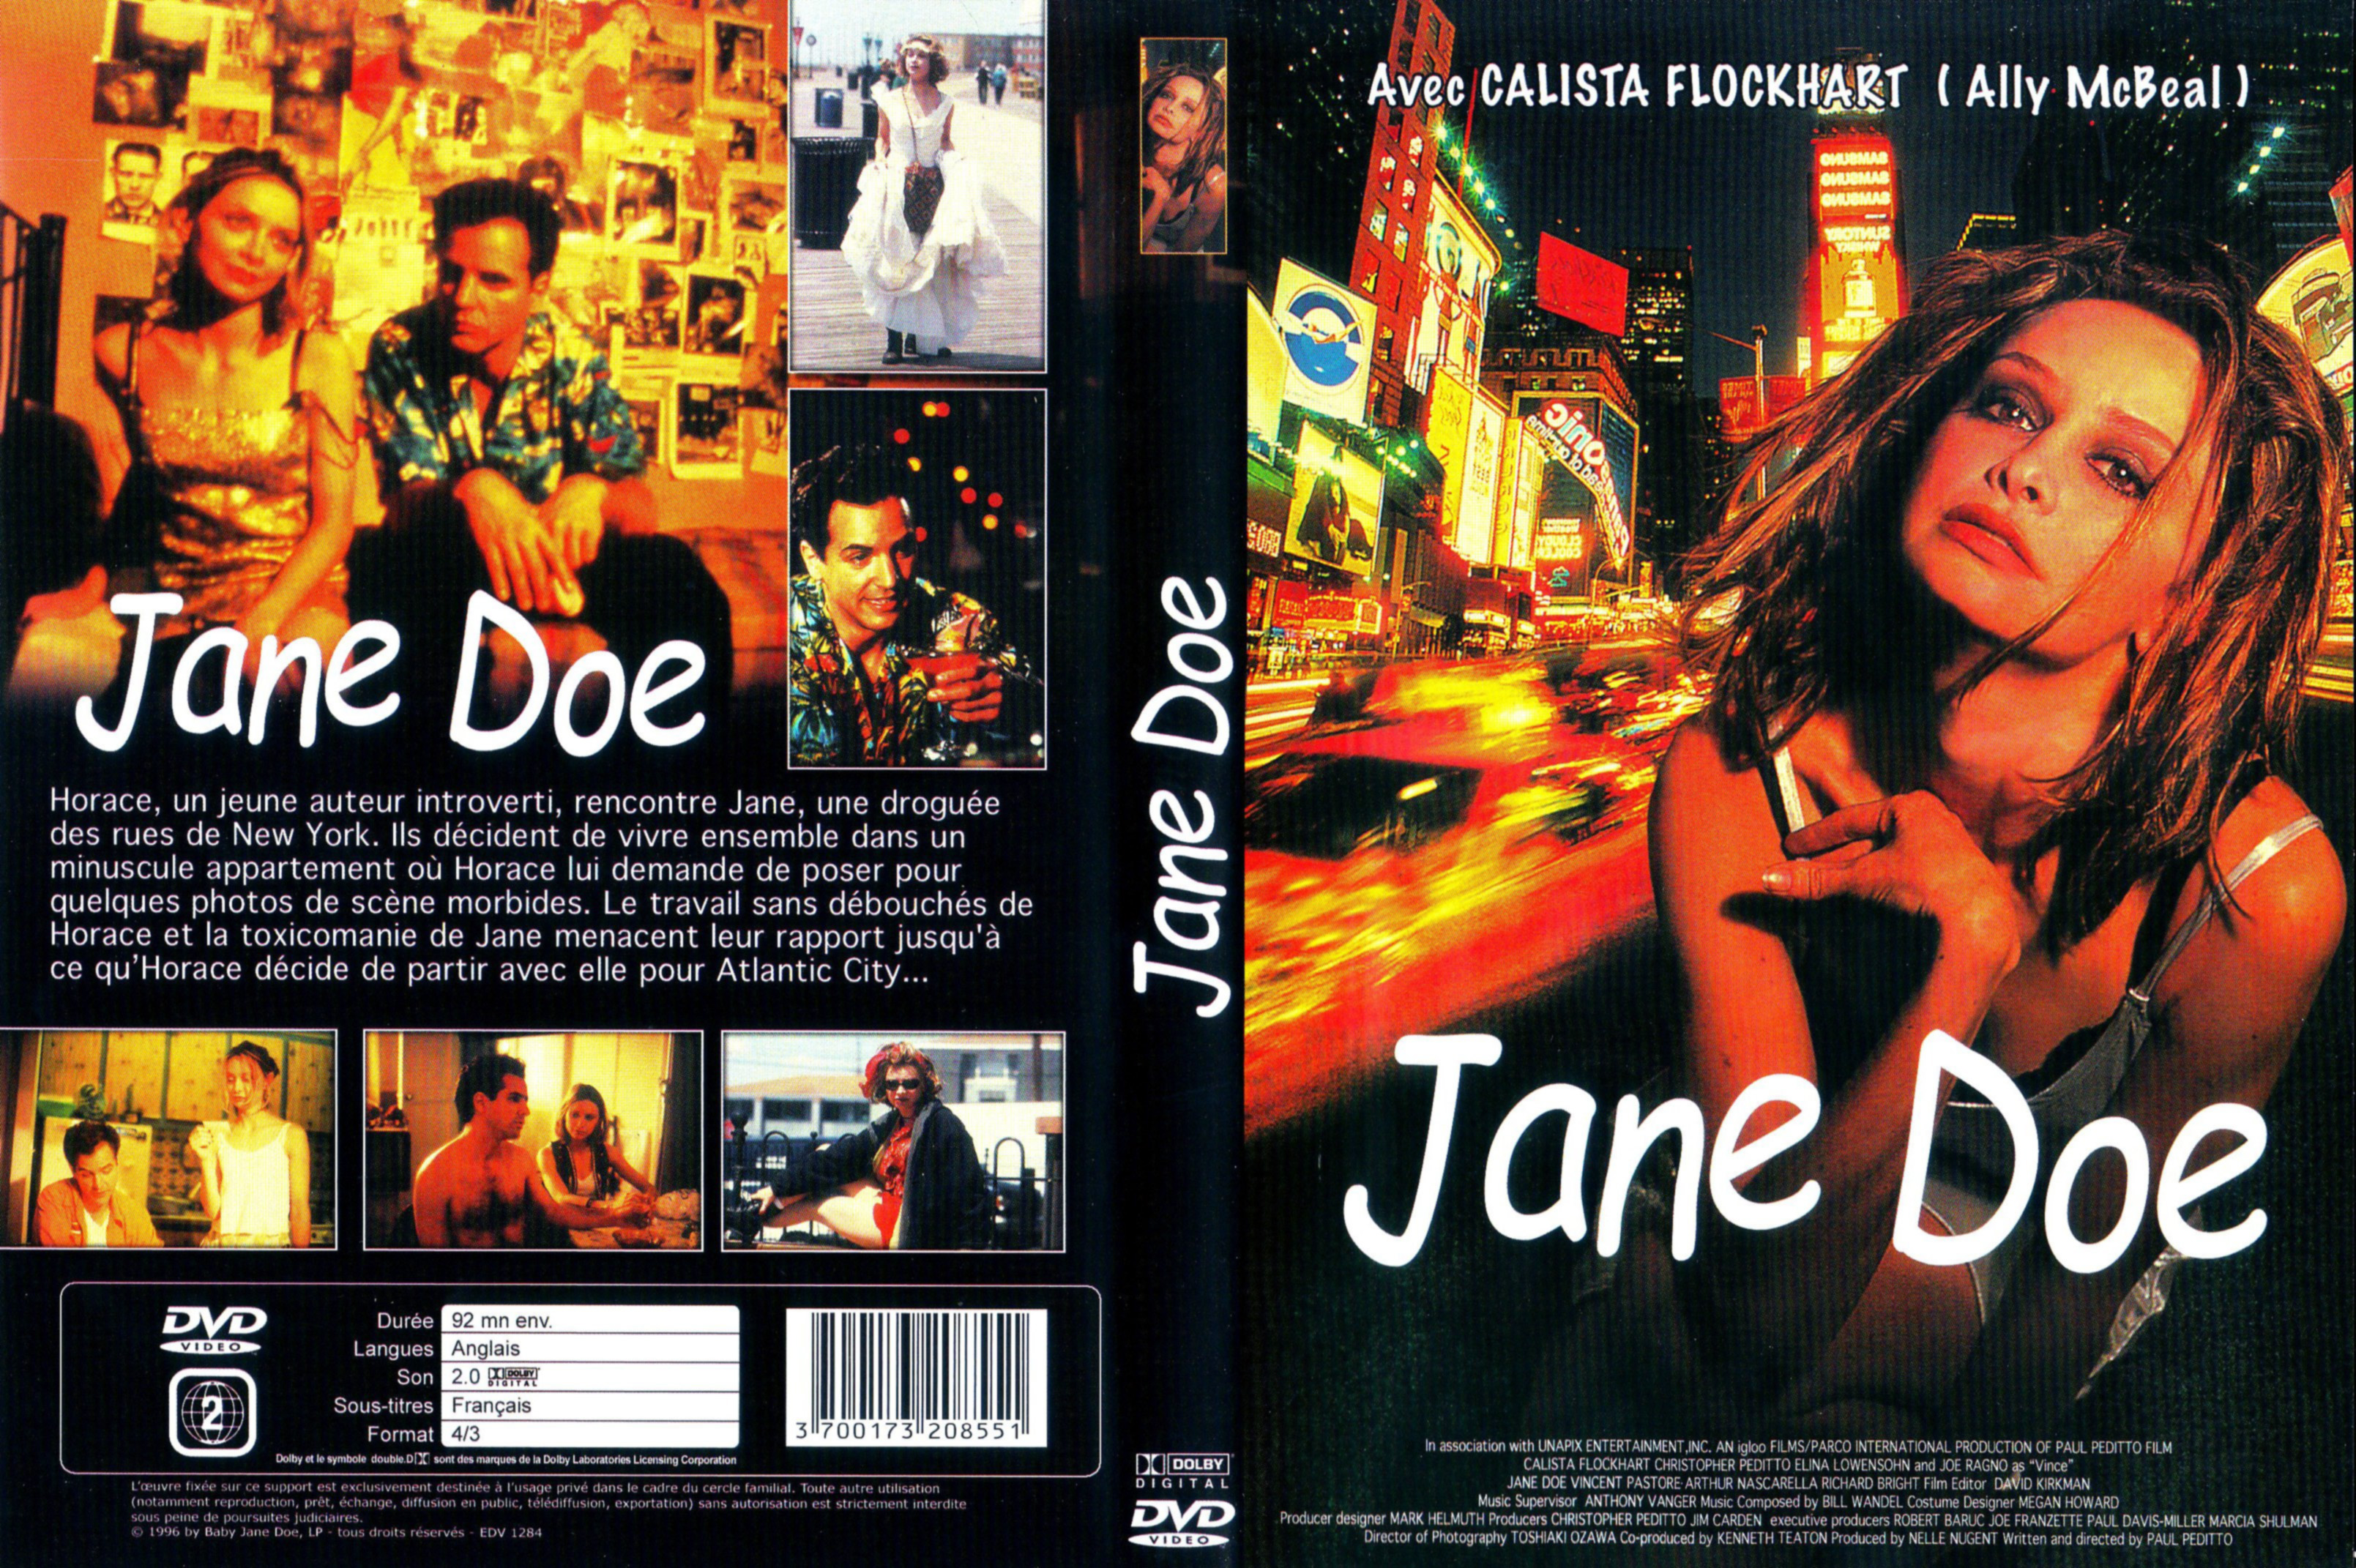 Jaquette DVD Jane Doe